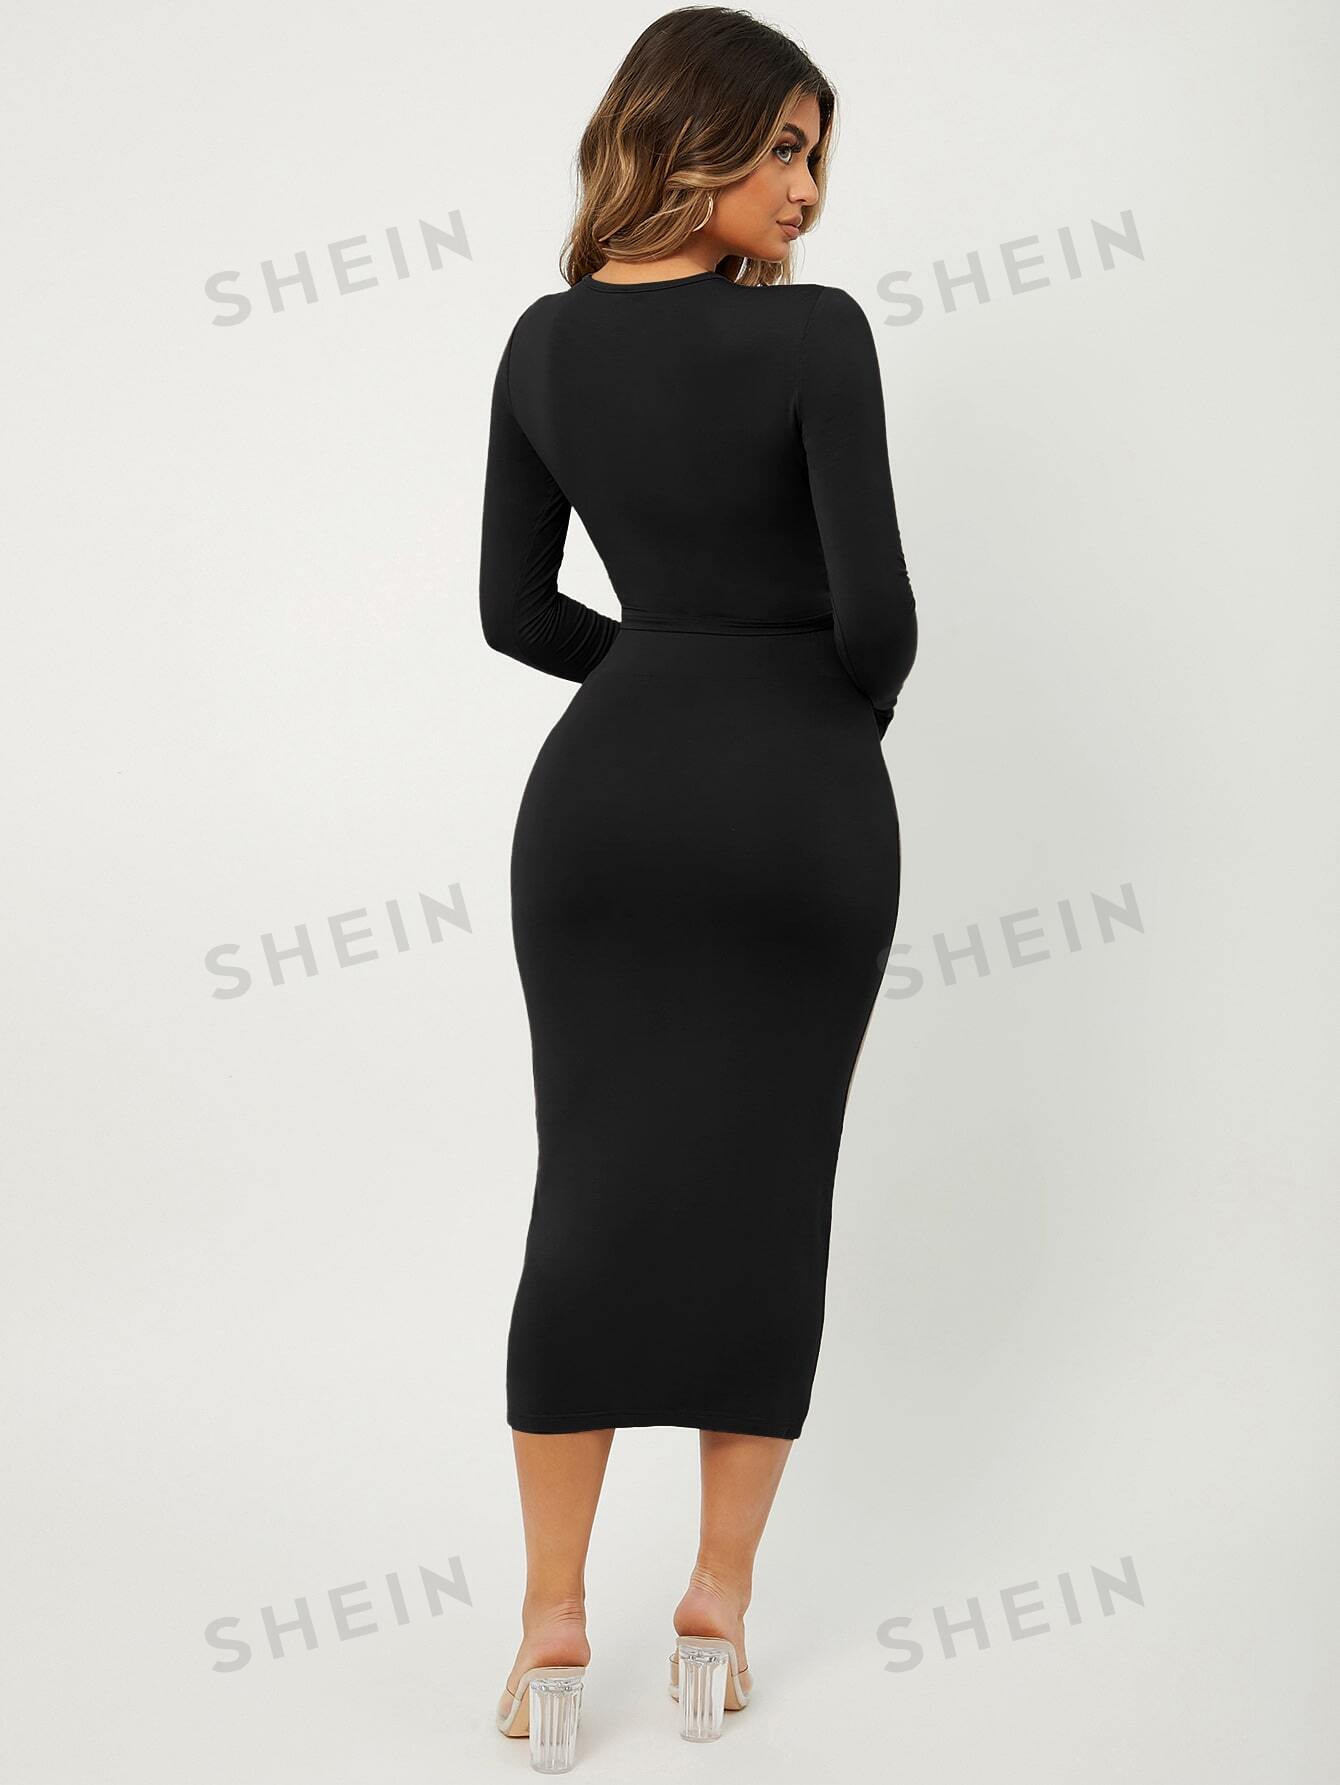 SXY Solid Slim Fit Crop Top & High Waist Pencil Skirt - Negative Apparel